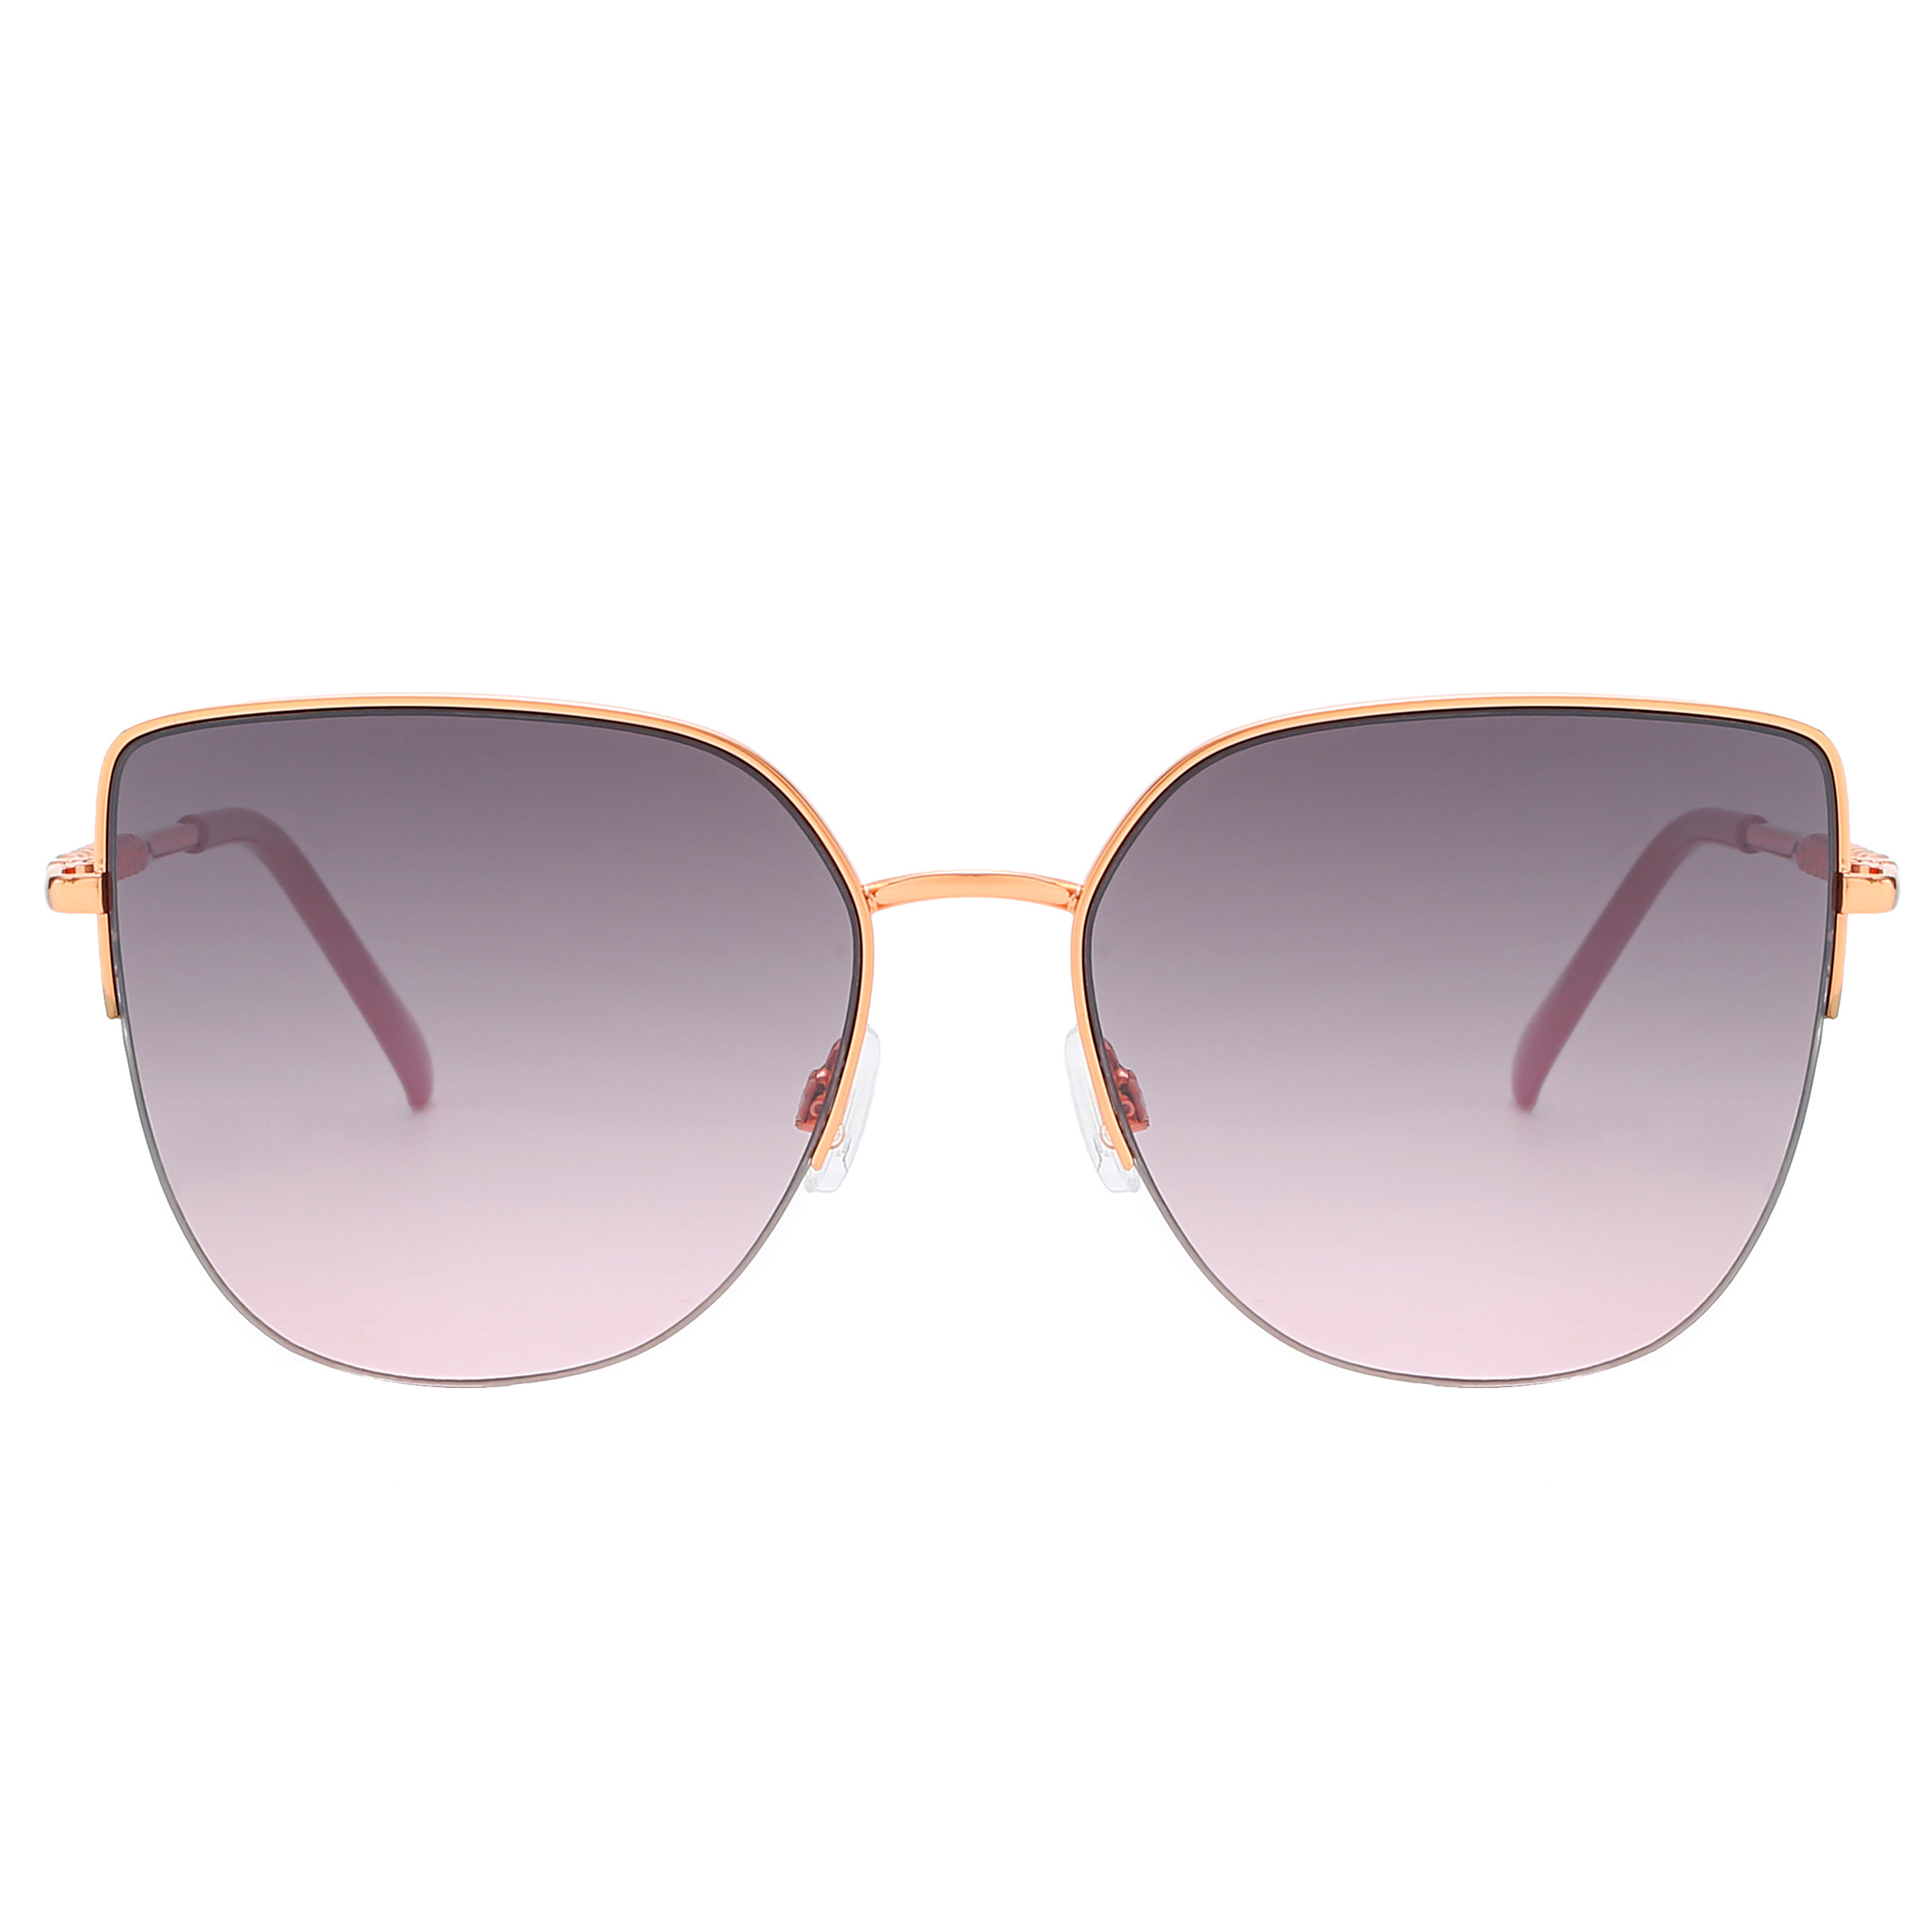 Piranha Eyewear Rebecca Oversize Cat Eye Sunglasses for Women with Purple Gradient Lens - image 2 of 3